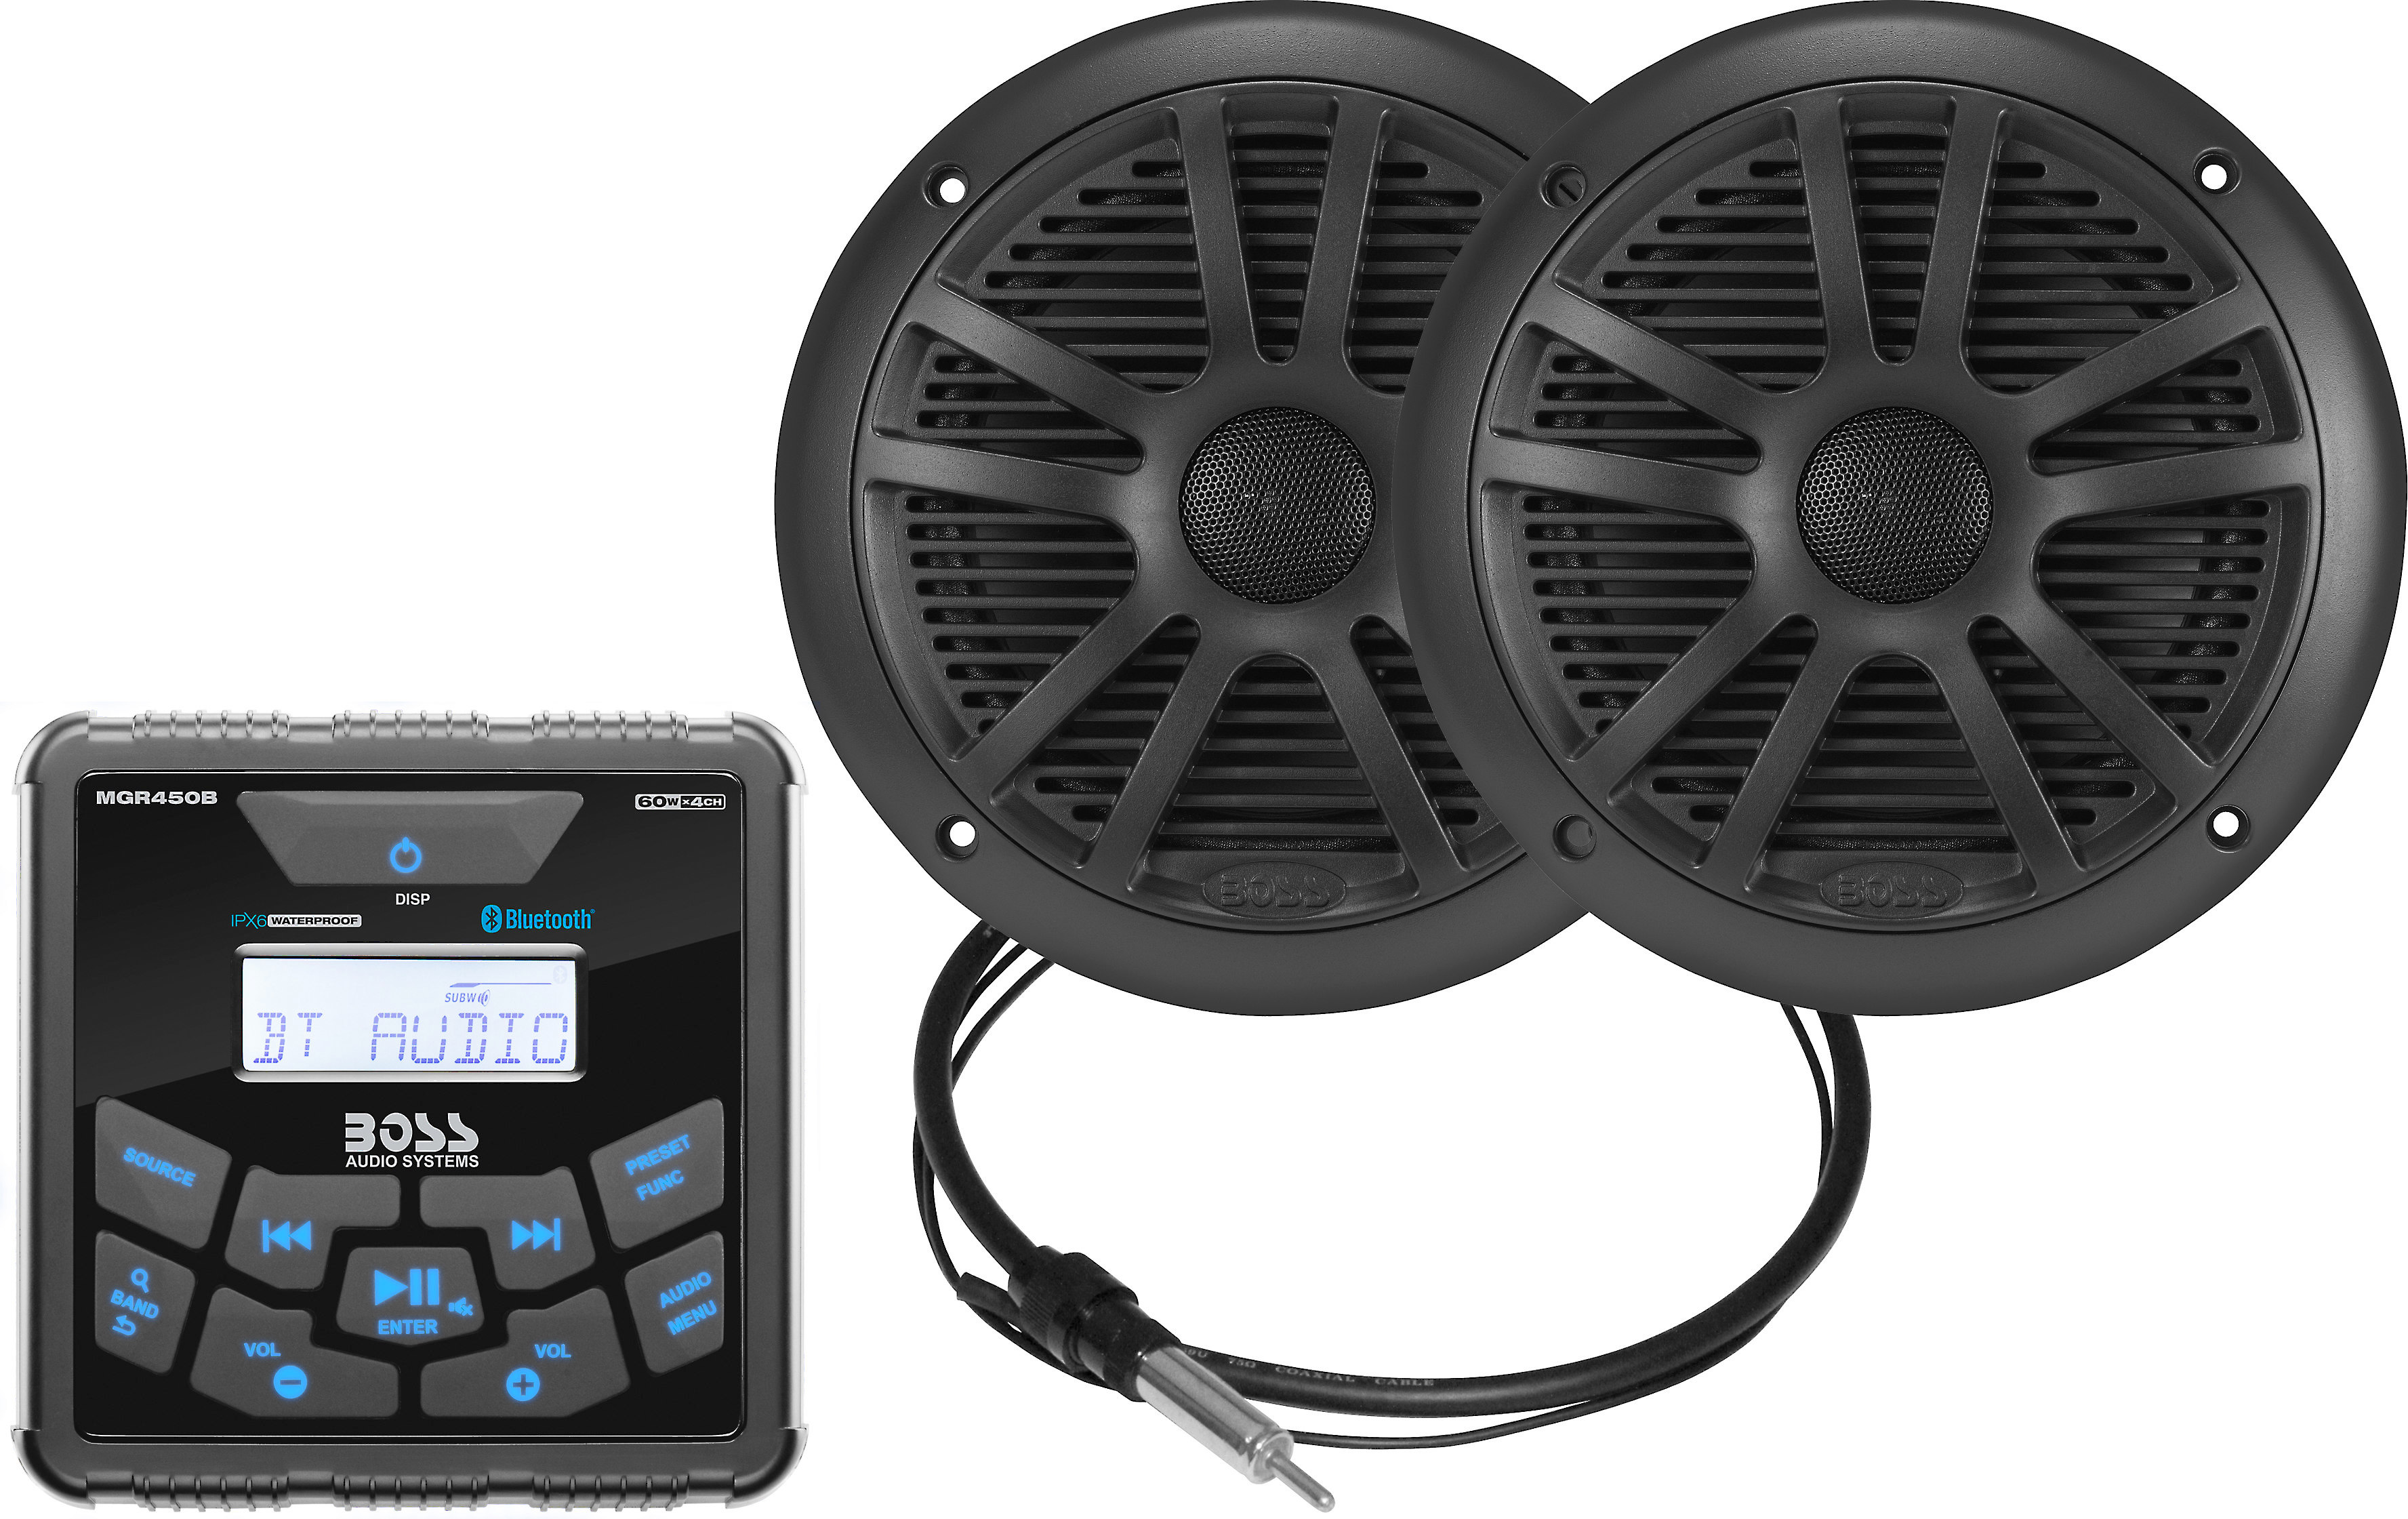 udstilling hensigt Retfærdighed Customer Reviews: Boss Audio MCKGB450B.6 (Black speakers) Marine audio  package: Includes MGR450B digital media receiver (does not play CDs) and  two MR6 6-1/2" marine speakers at Crutchfield